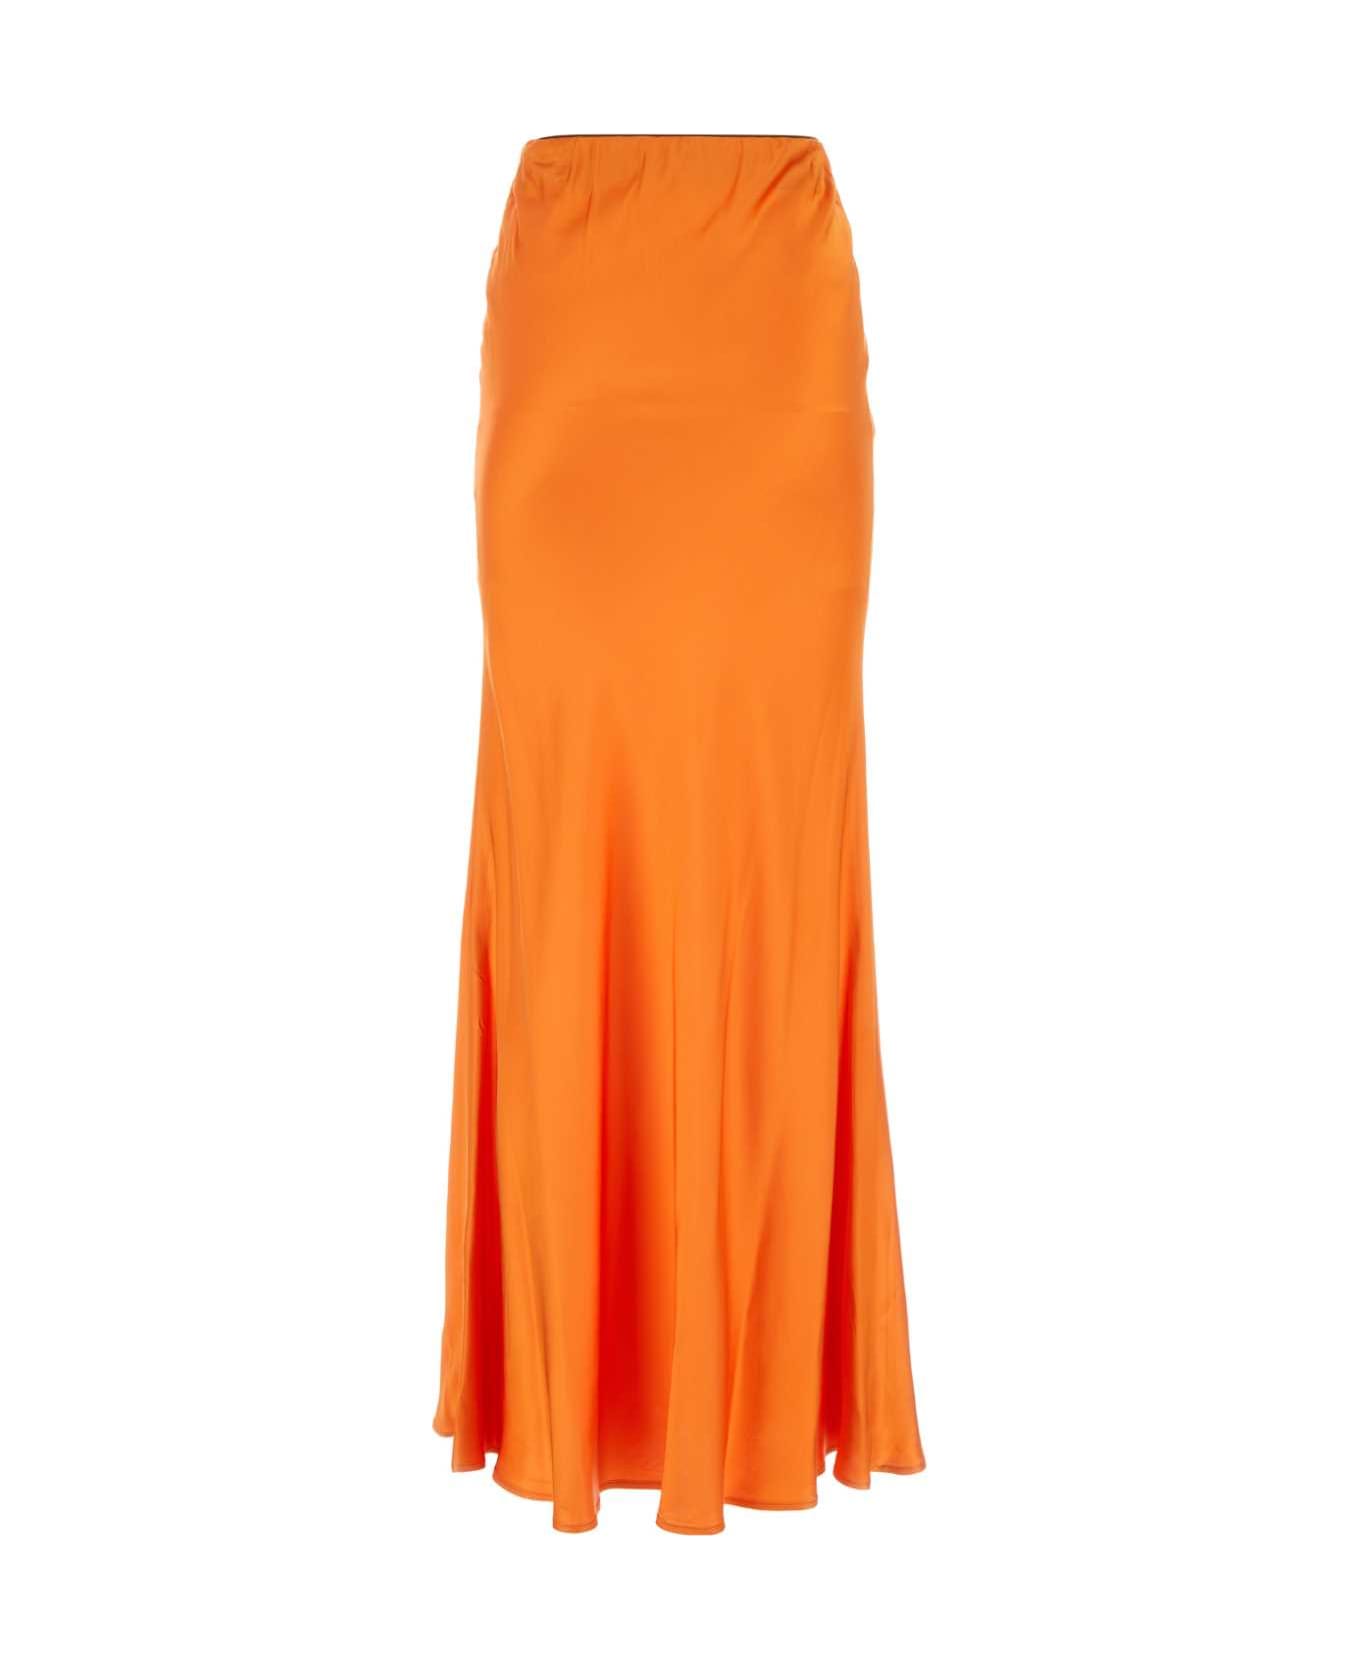 Hebe Studio Orange Satin Kate Skirt - ORANGE